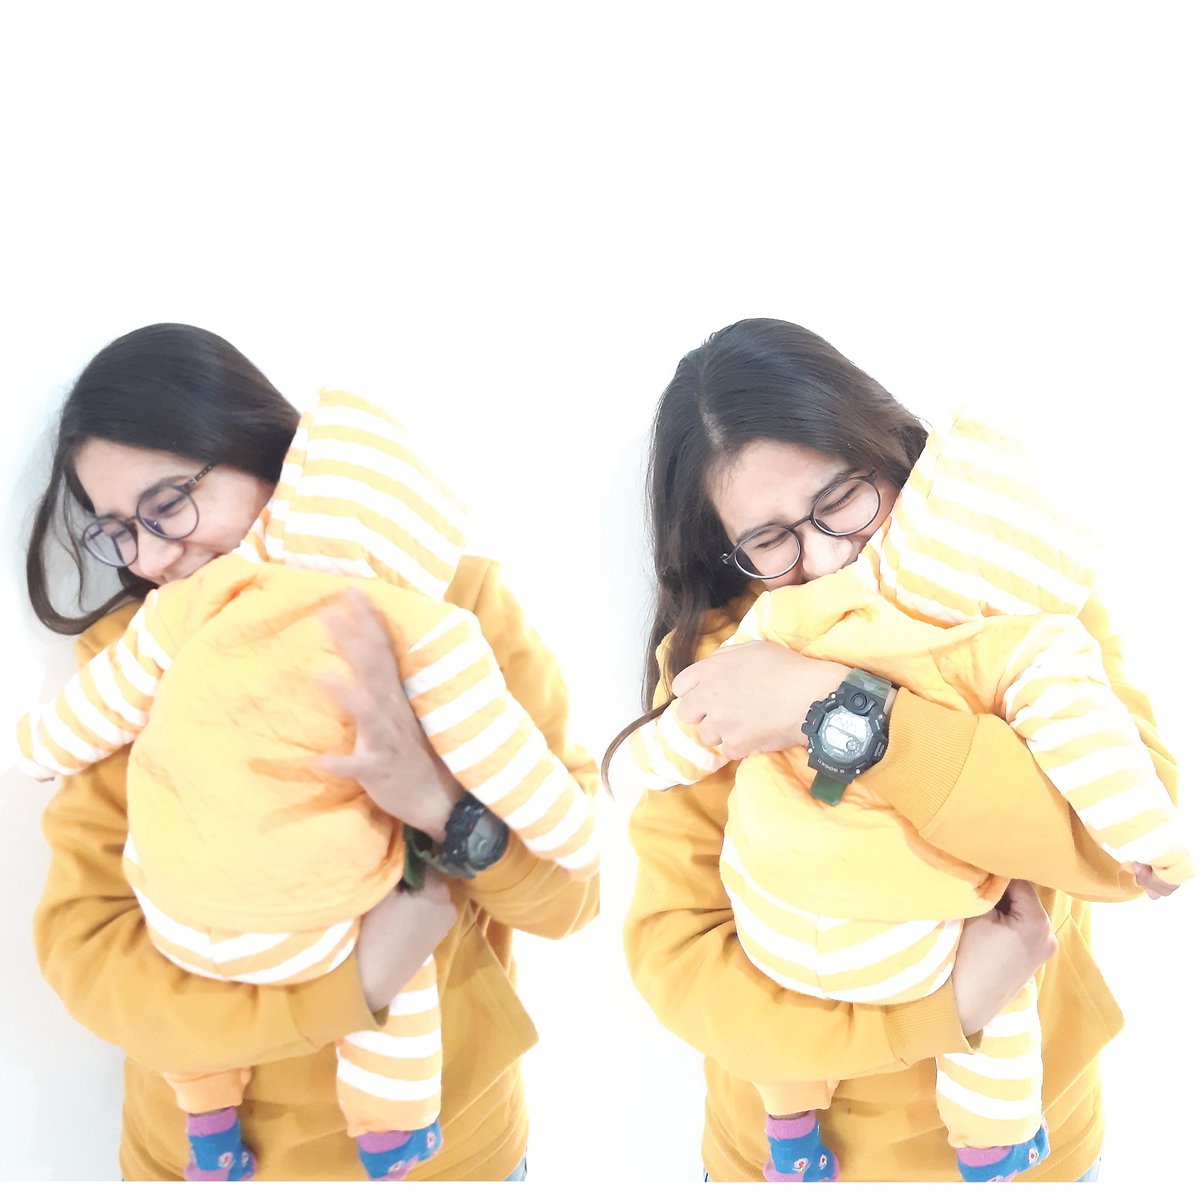 Hugs 🫂 can do great amounts of good, especially for children.
#explore_neha #neha_vibe😍 #babylover
#nehathebabylover🤩 #neha_videodiaries #neha_fullofdramas #babyreels #babygirl #mylittleprincess